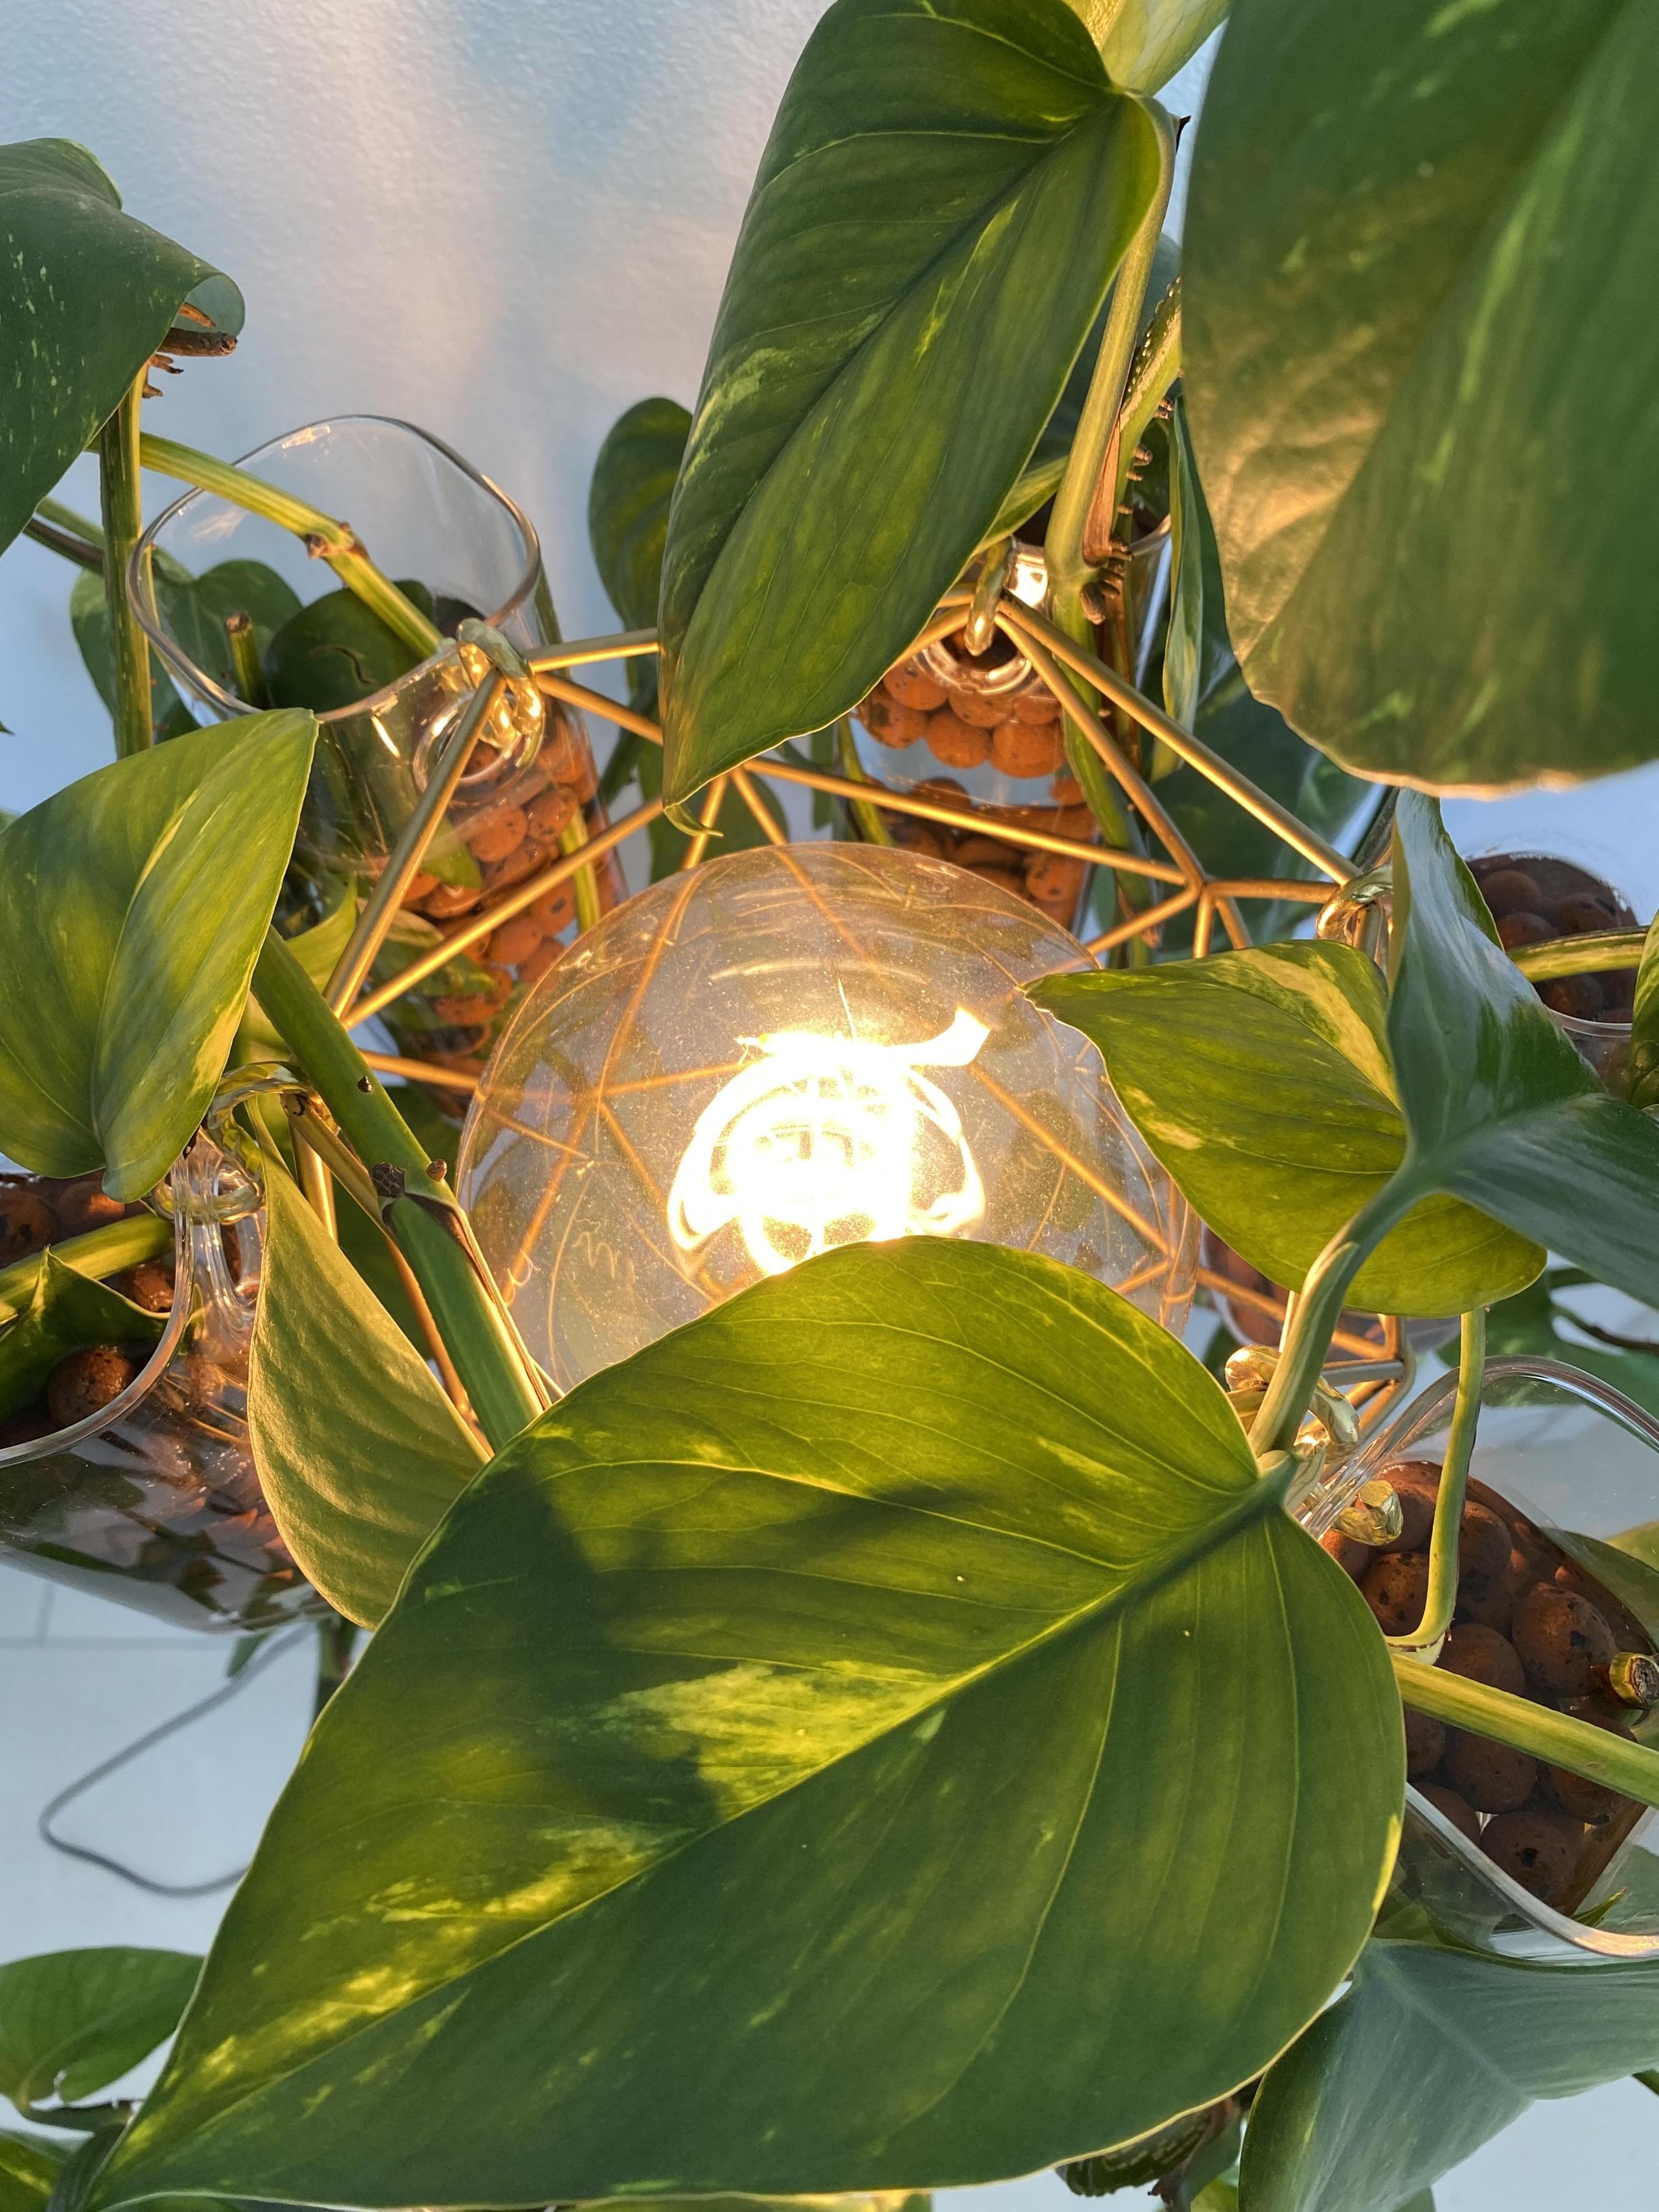 Floor Lamp with plants NATURA